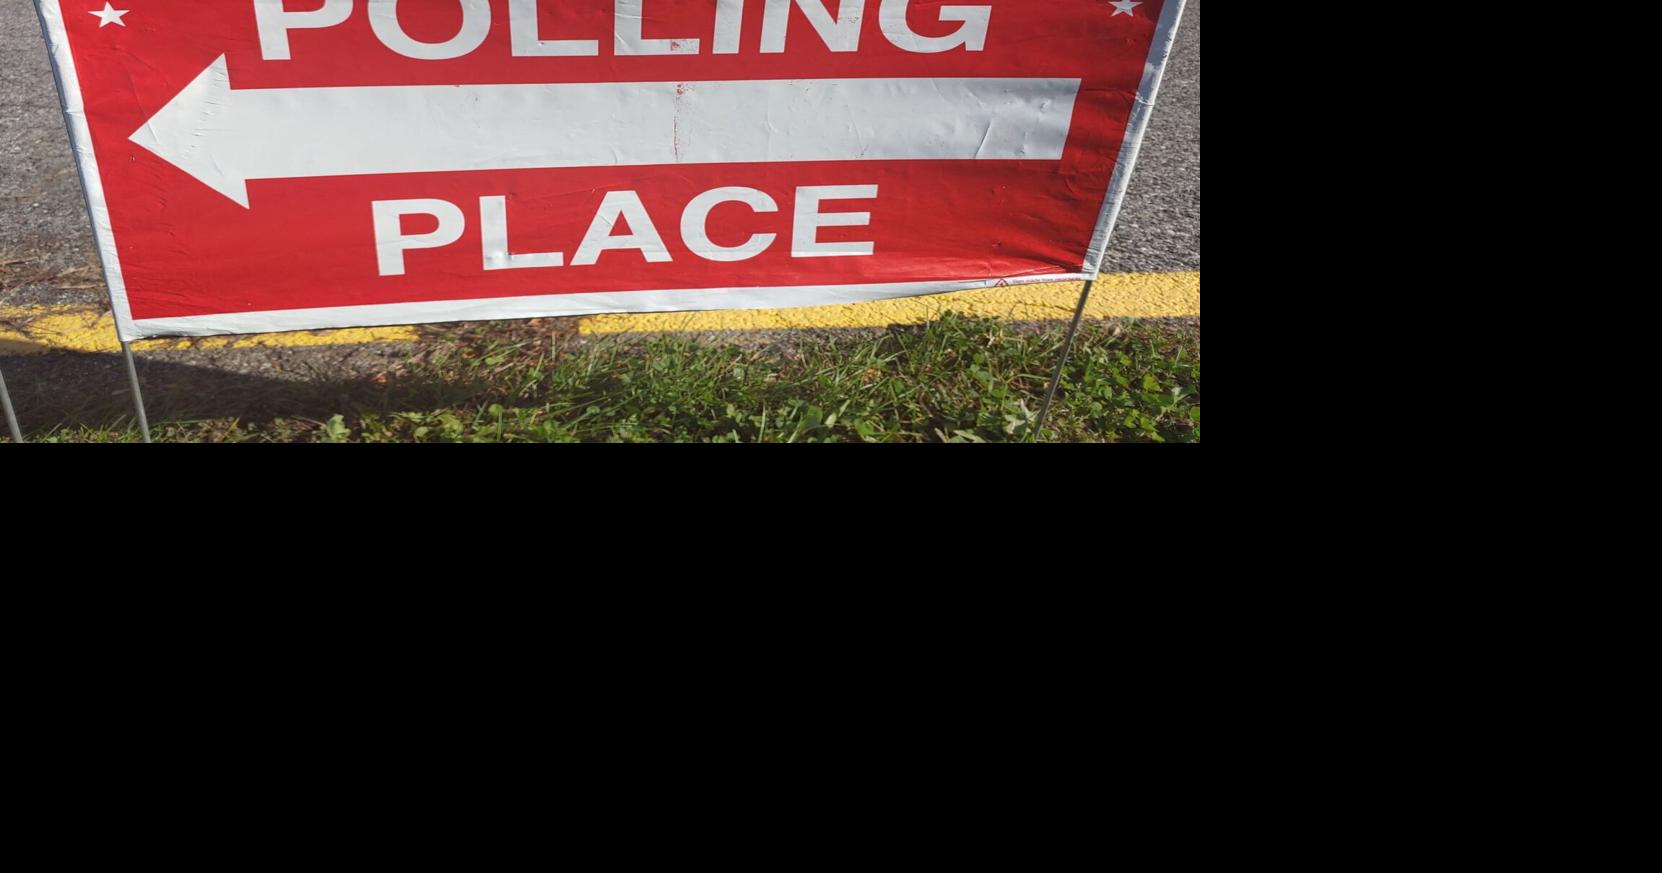 Early Voting? | Delaware legislators again contemplating moving primary to April